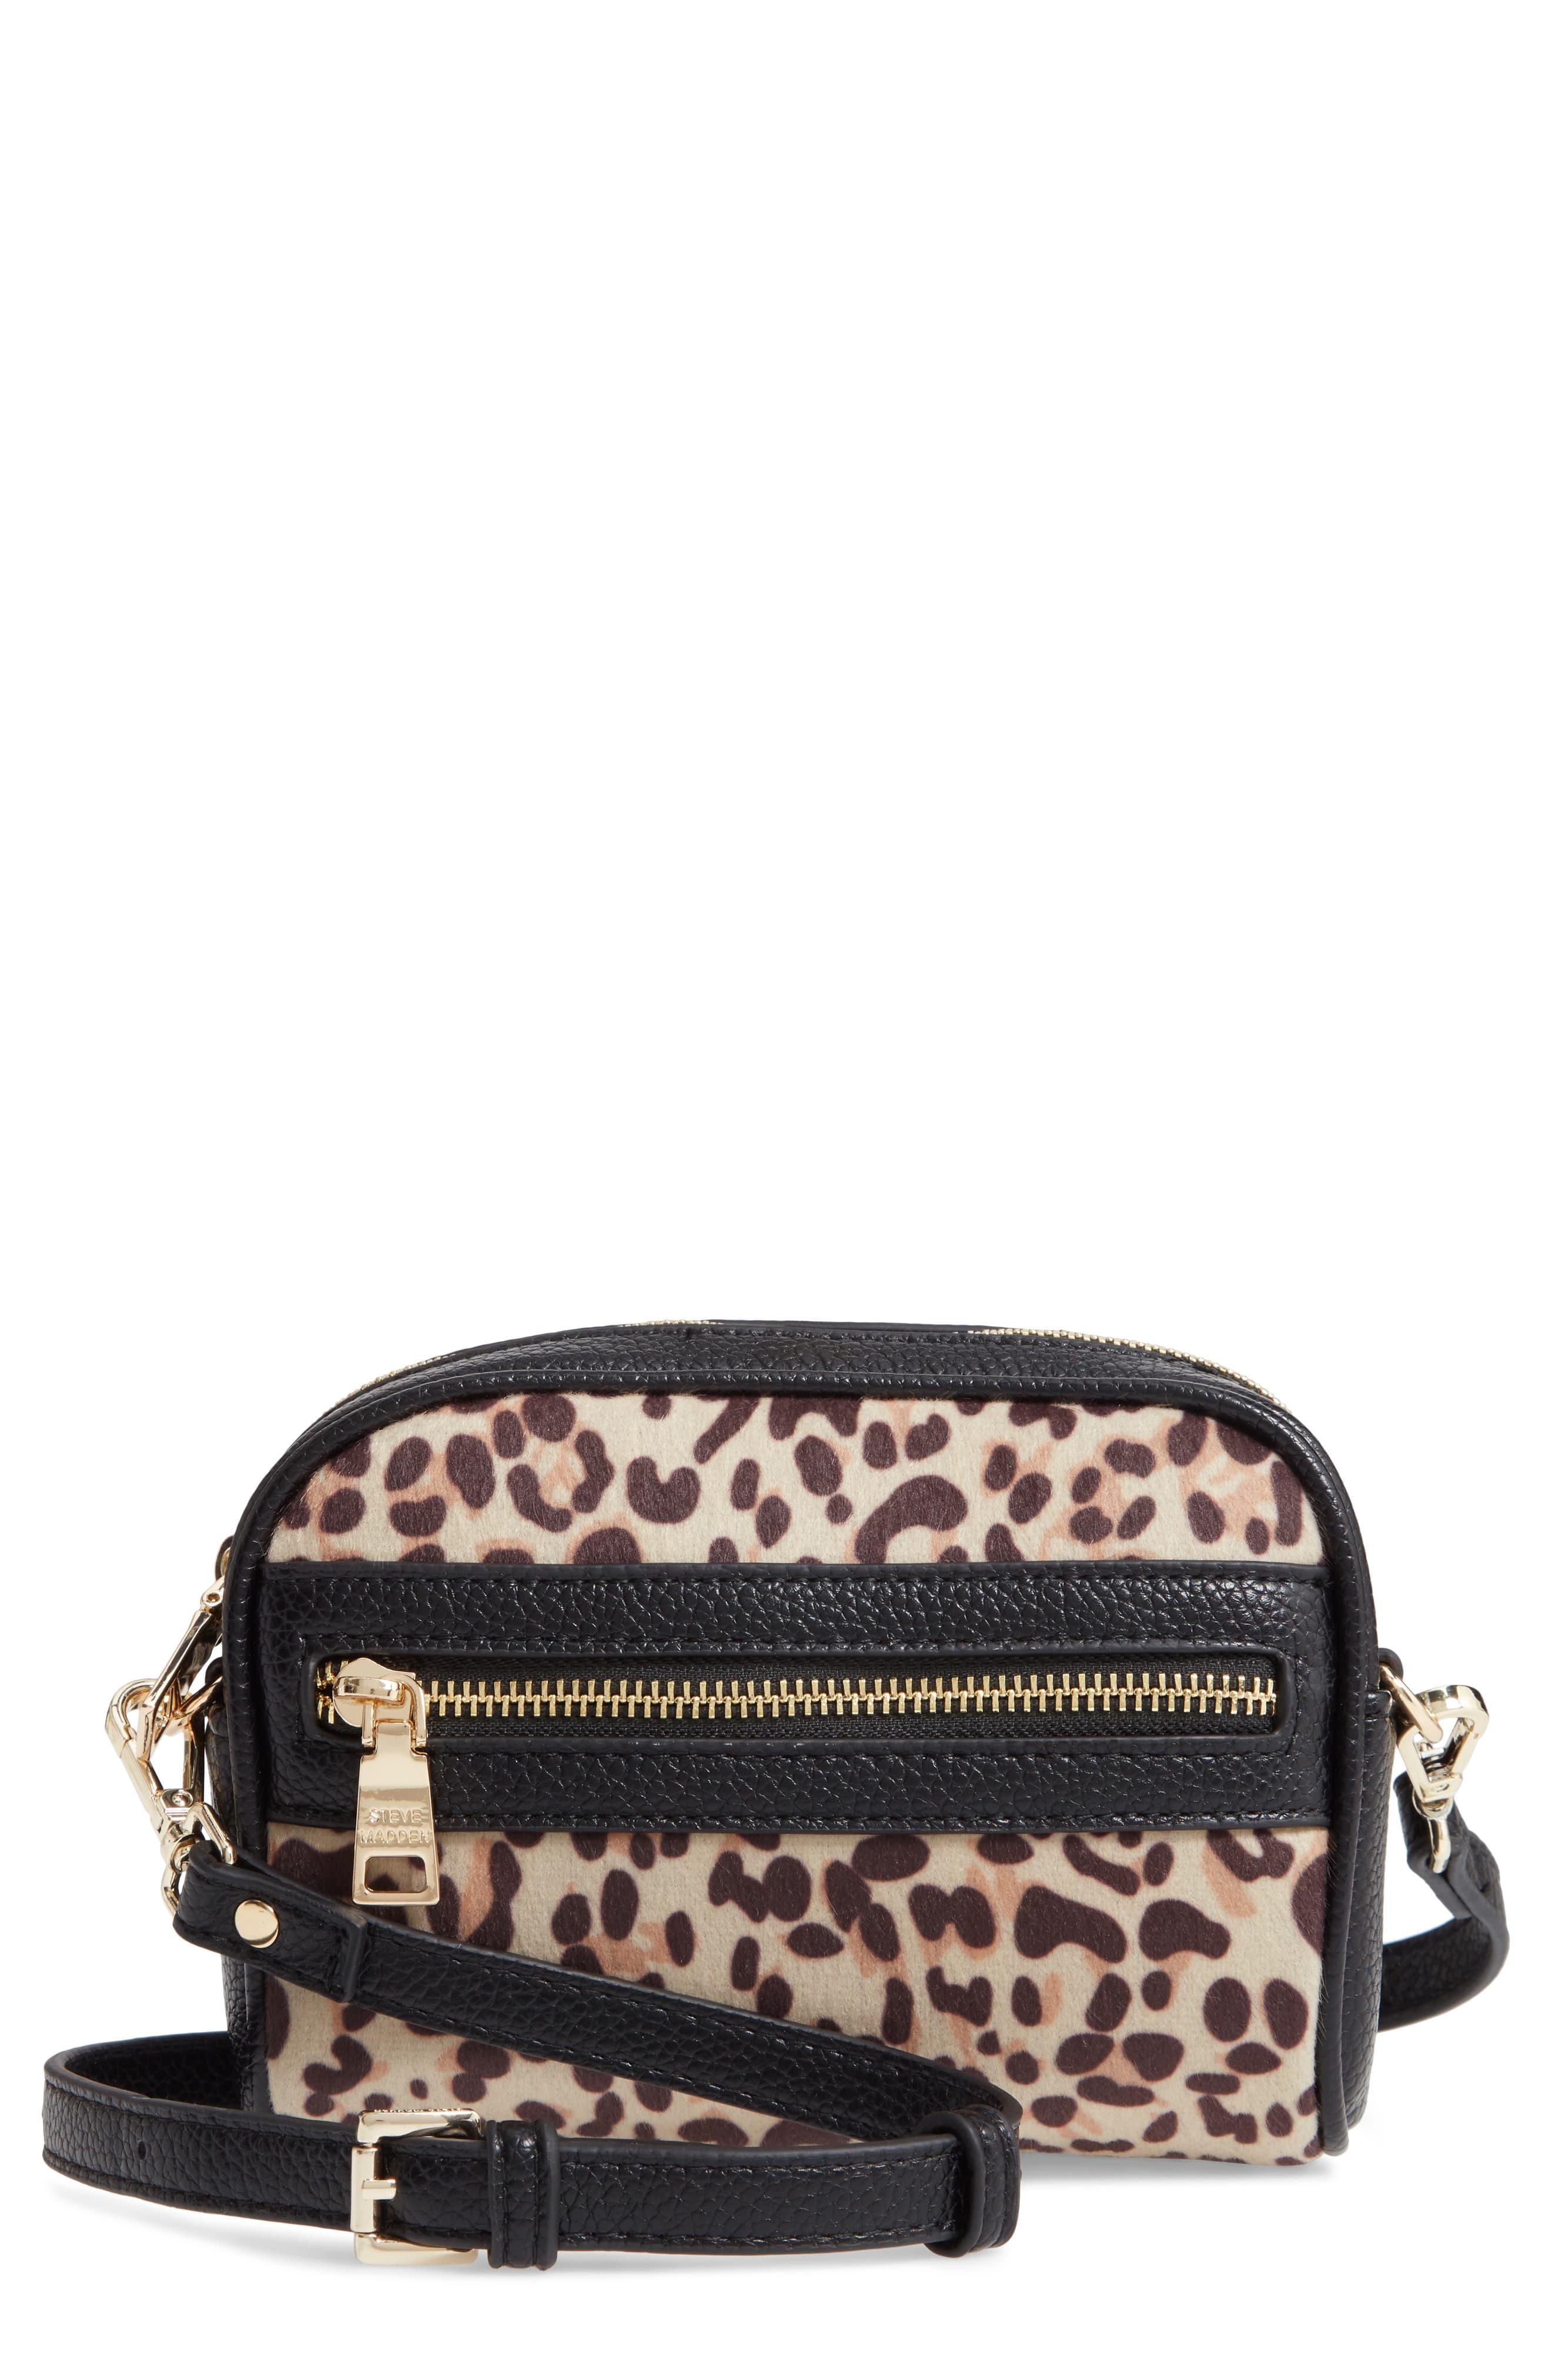 Steve Madden Leopard Print Crossbody Bag in Leopard/ Black (Black) - Lyst